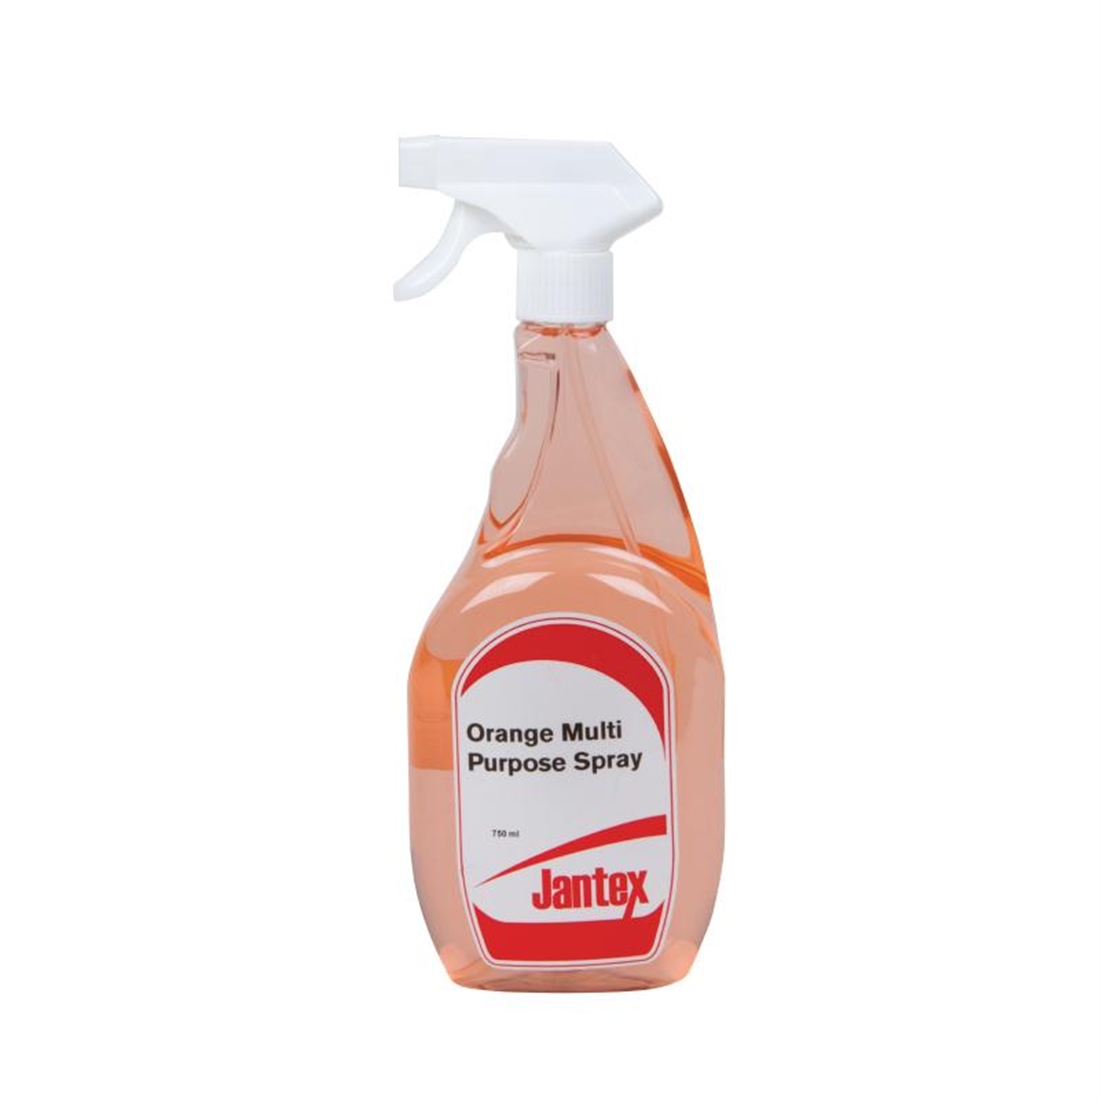 Jantex Multi Purpose Orange Based Citrus Cleaner and Degreaser 750ml (Pack of 6)